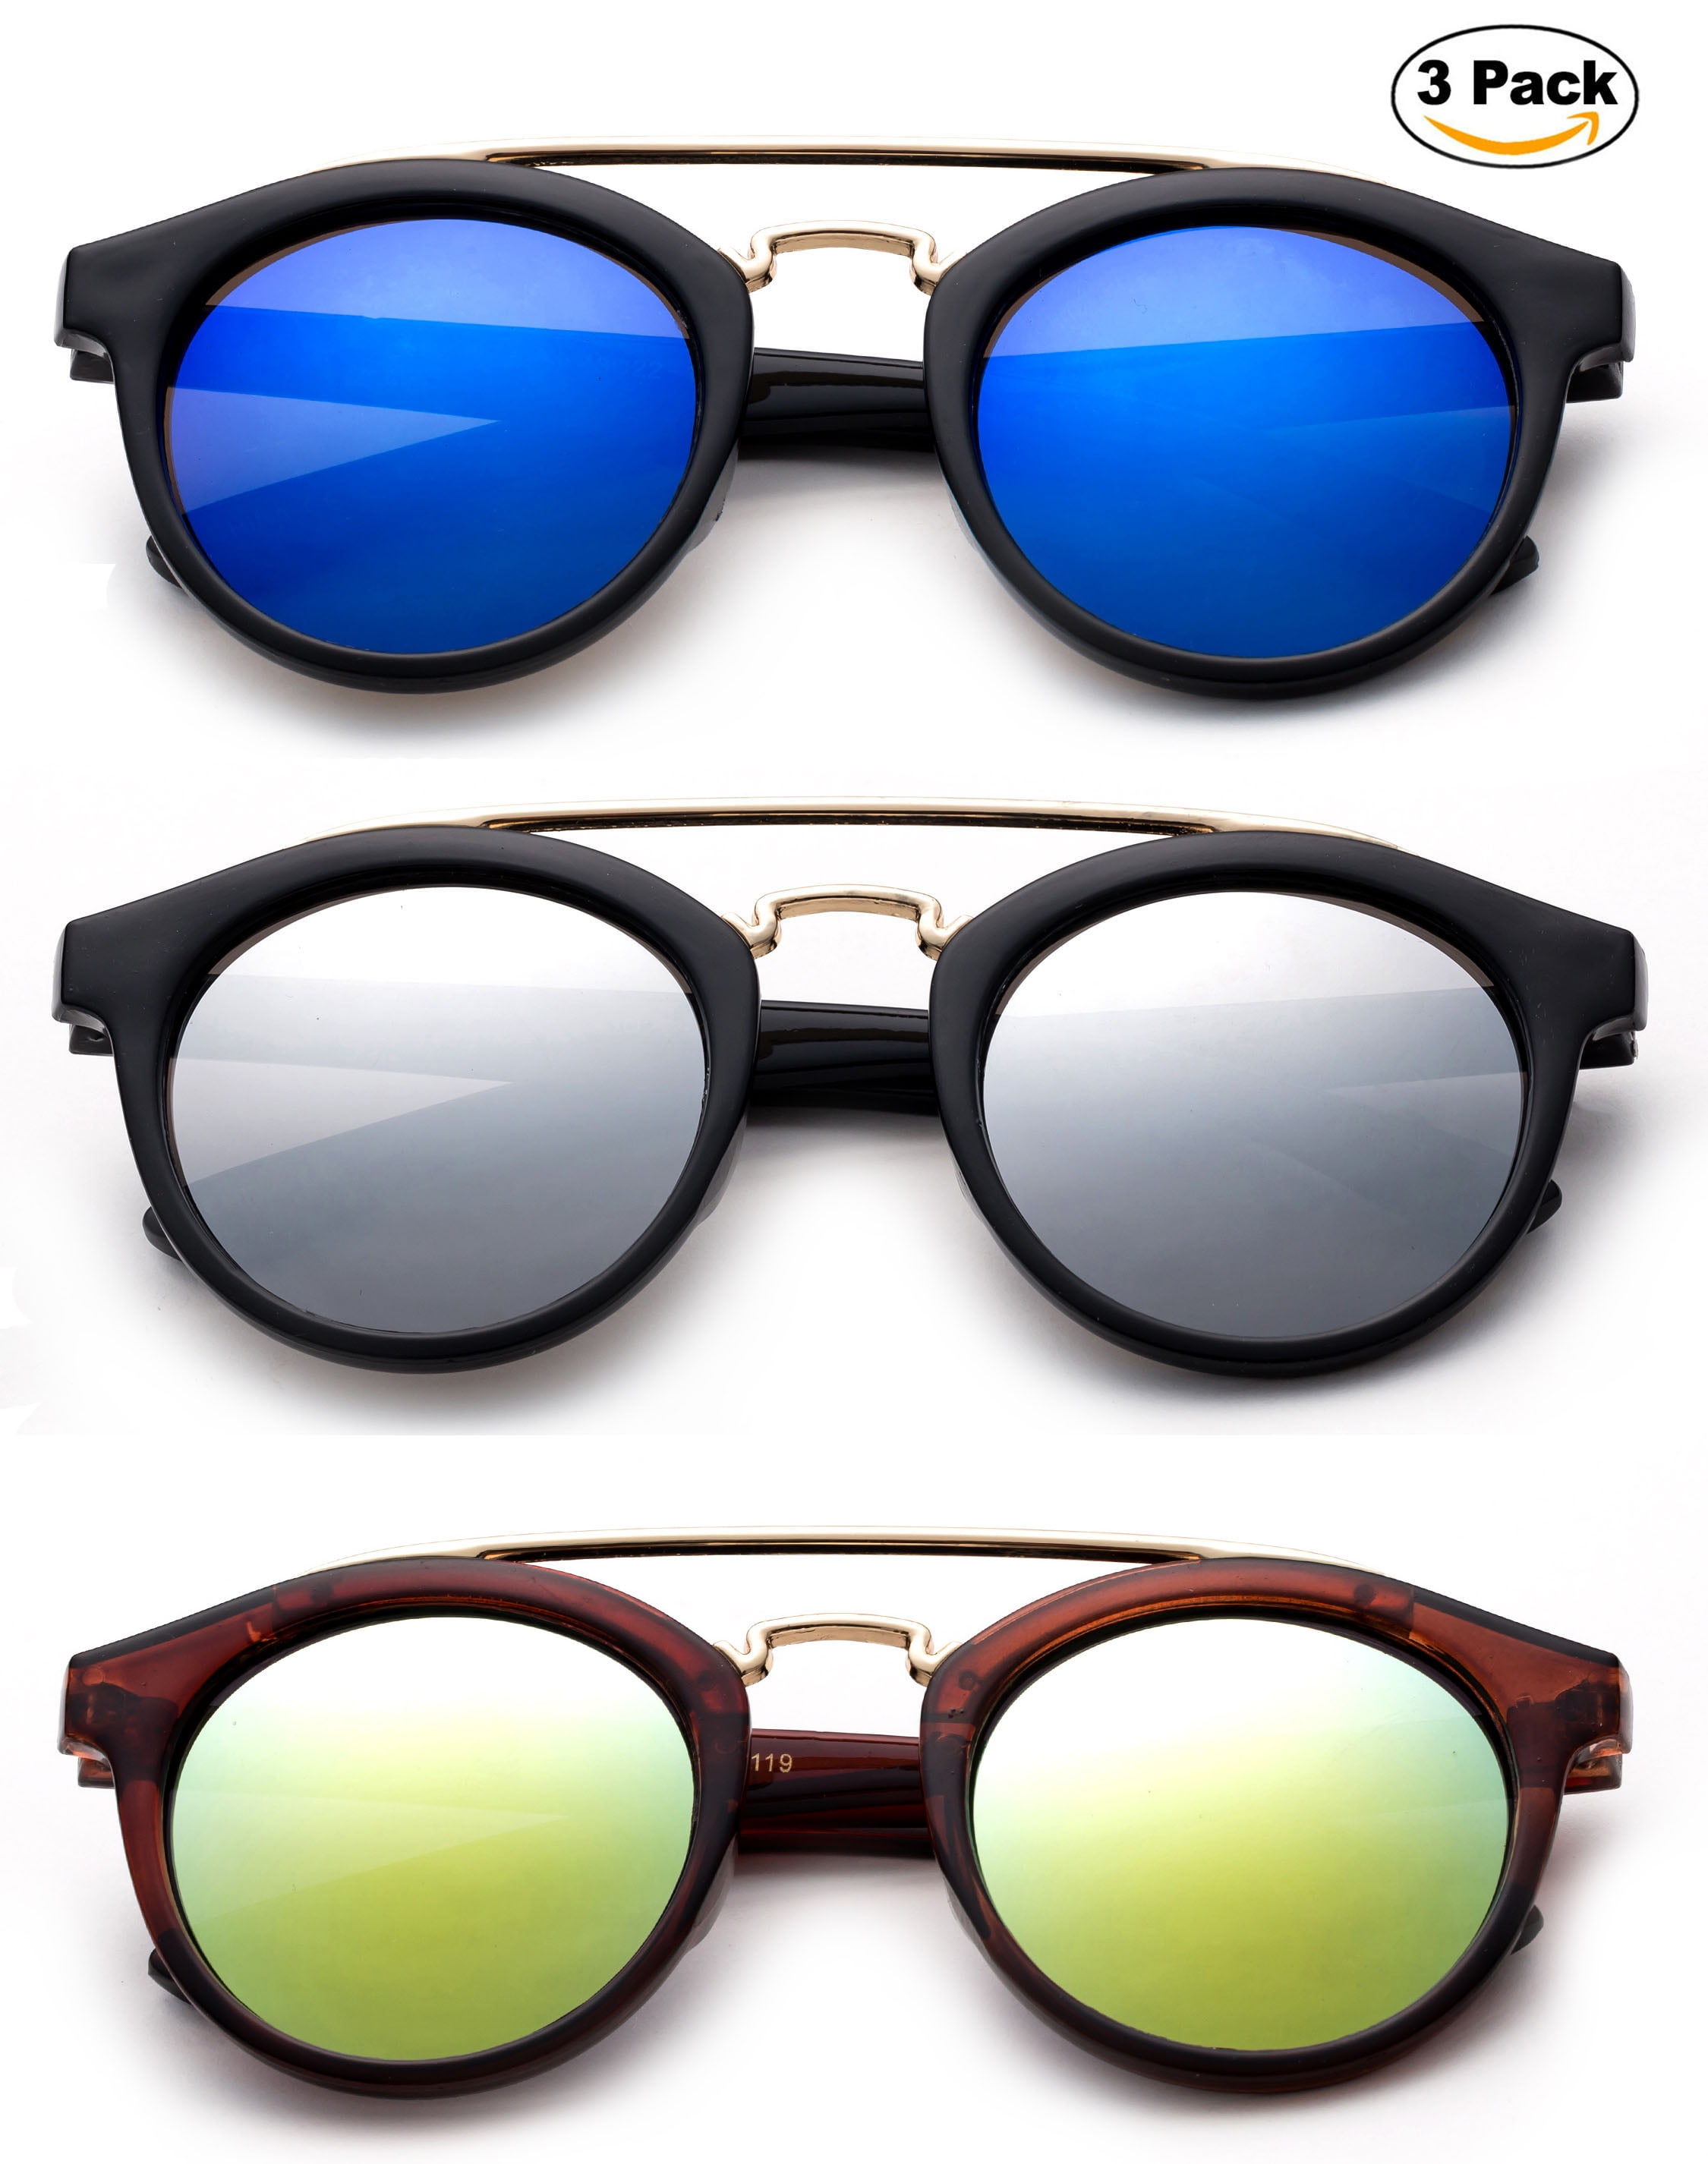 Kids Sunglasses Classic Sporty Lead Free UV 100% Flash Mirror Lens Boys Girls 